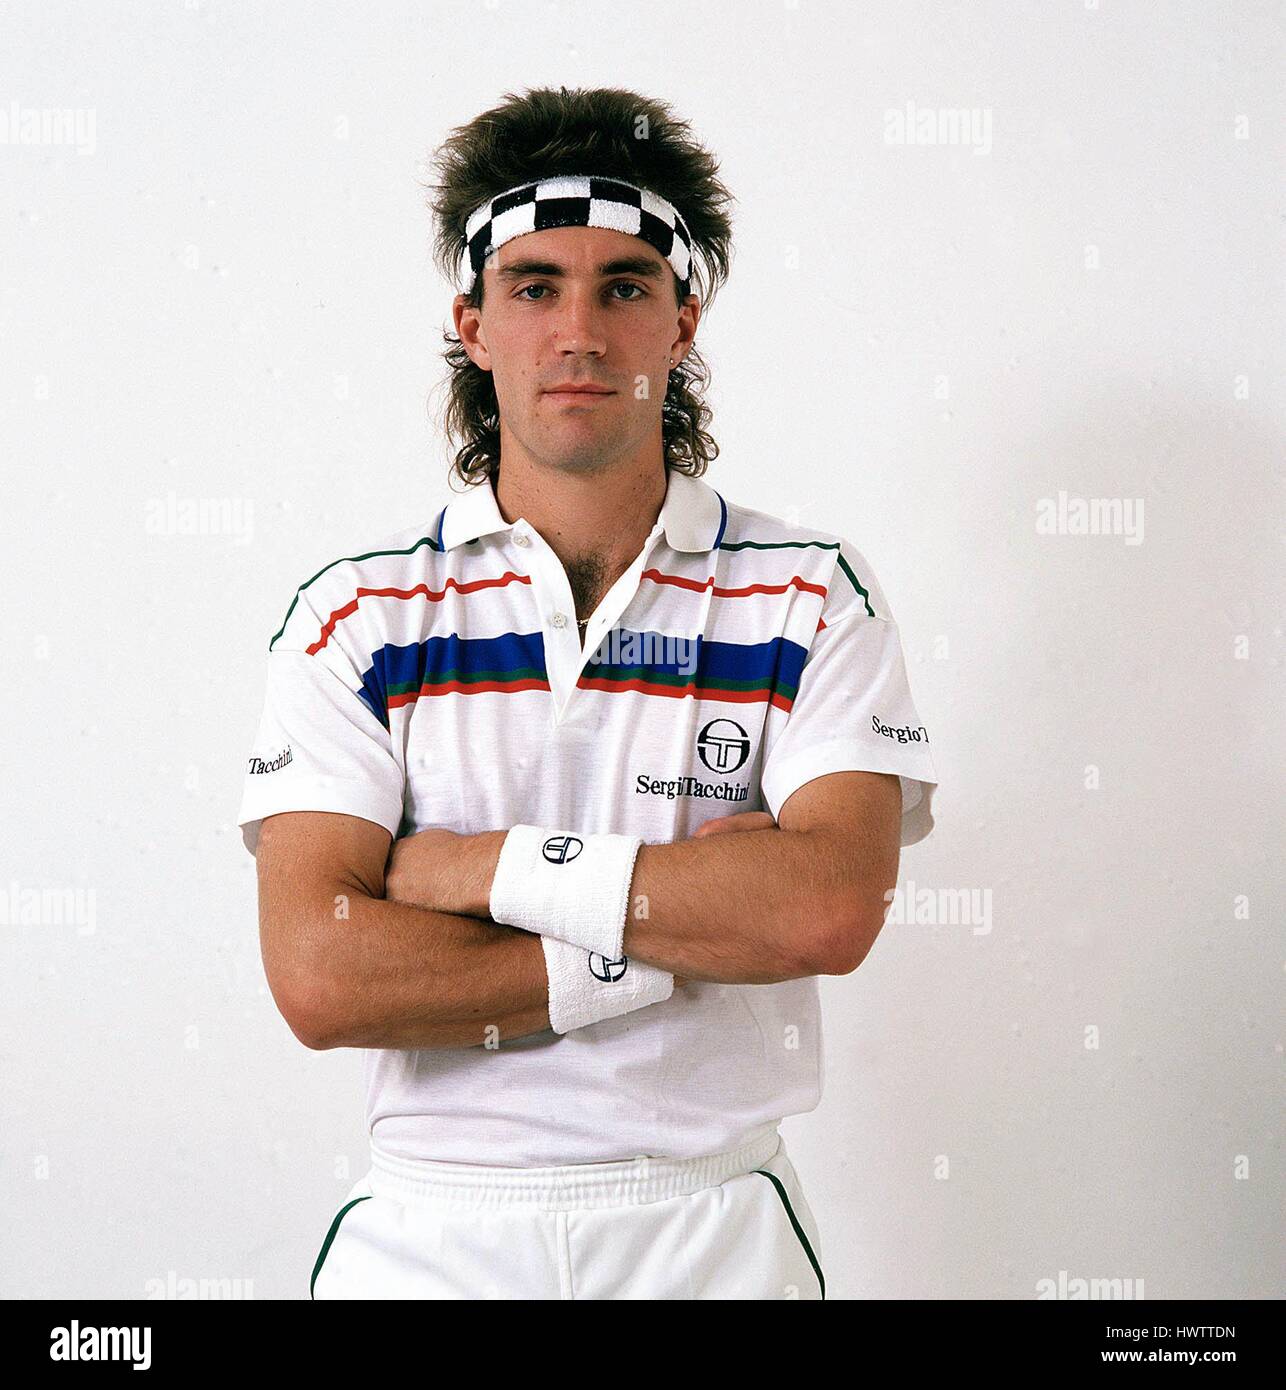 PAT CASH TENNIS PLAYER 01 July 1987 Stock Photo - Alamy